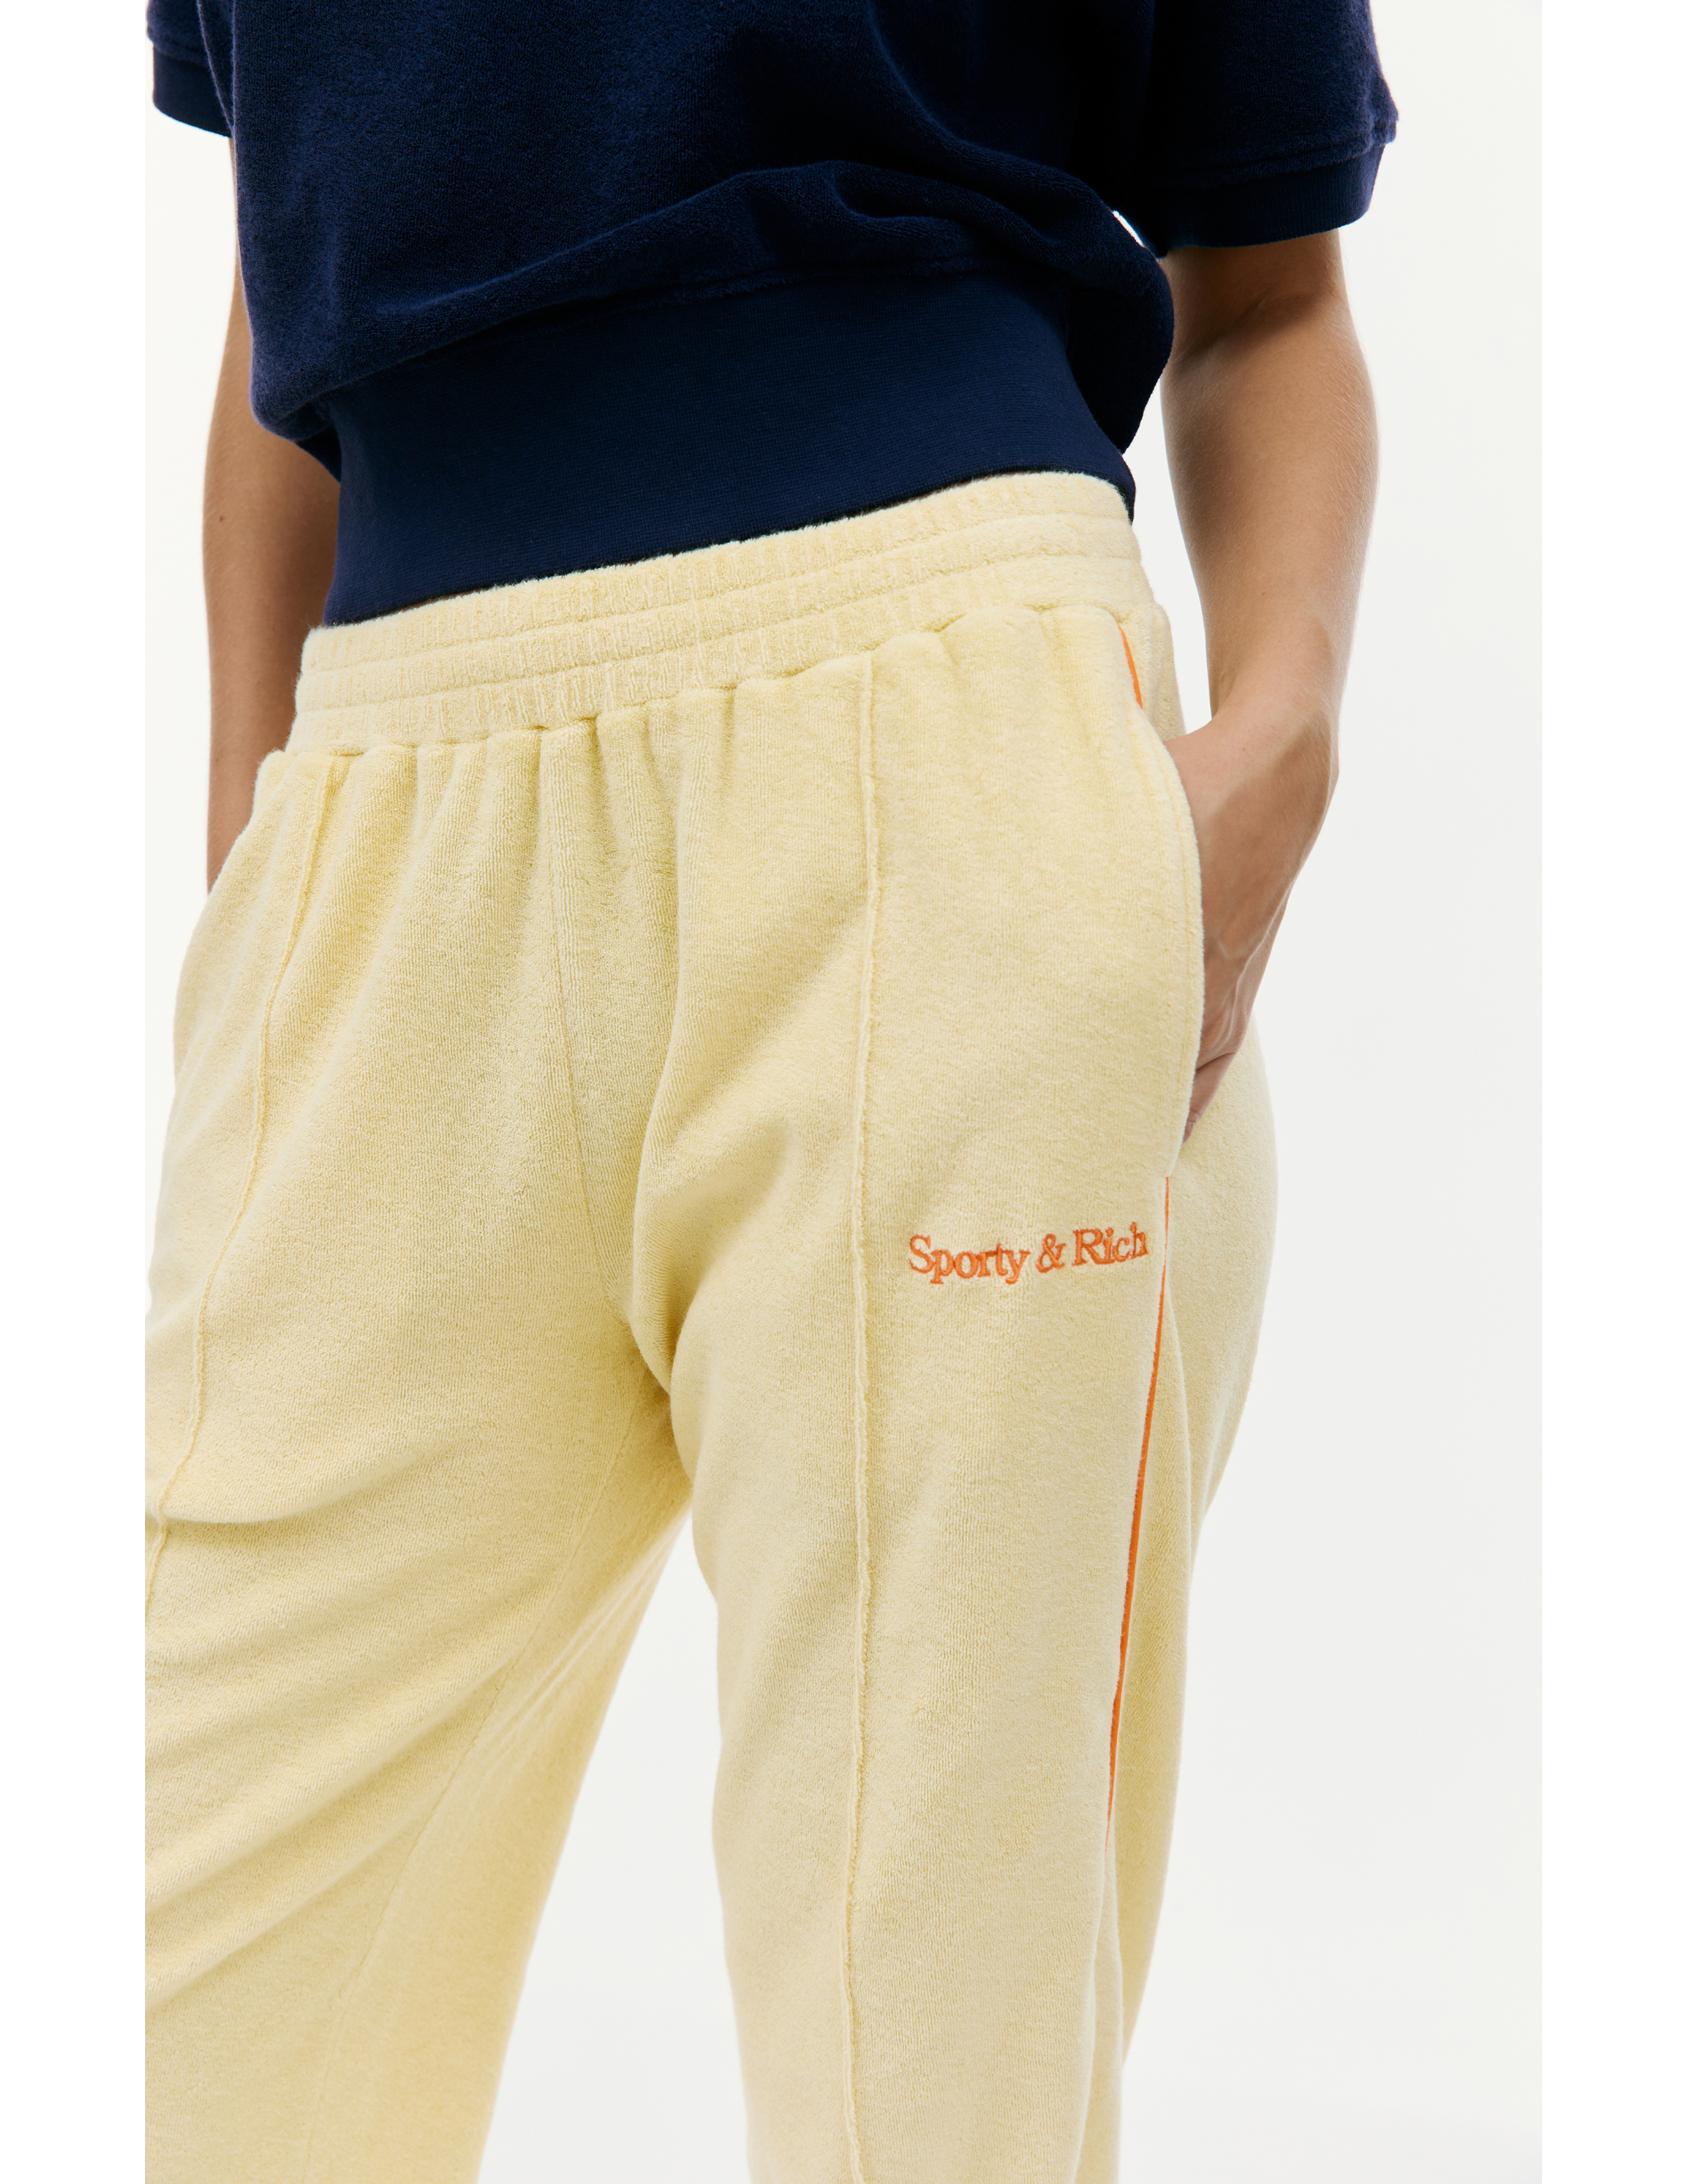 Спортивные брюки с лампасами SPORTY & RICH PA921AL, размер S;M;L;XL - фото 5